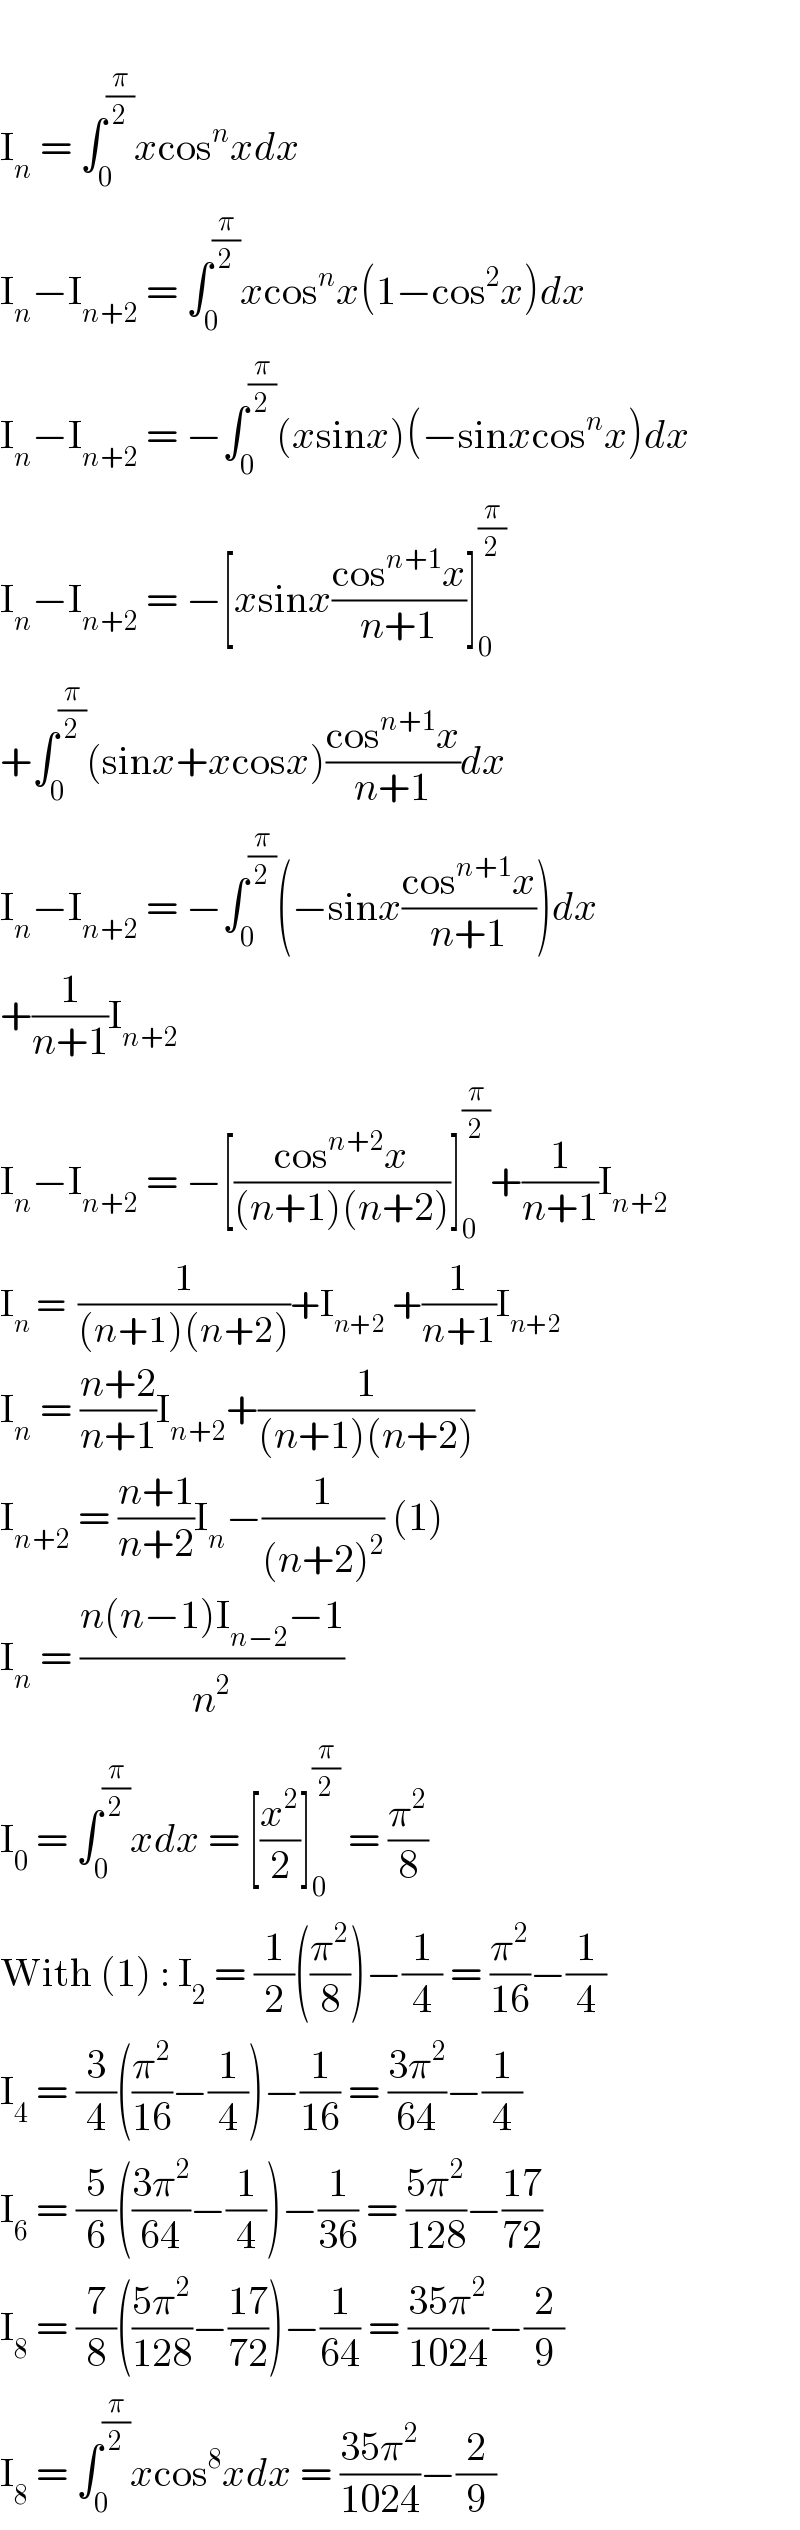   I_n  = ∫_0 ^(π/2) xcos^n xdx  I_n −I_(n+2)  = ∫_0 ^(π/2) xcos^n x(1−cos^2 x)dx  I_n −I_(n+2)  = −∫_0 ^(π/2) (xsinx)(−sinxcos^n x)dx  I_n −I_(n+2)  = −[xsinx((cos^(n+1) x)/(n+1))]_0 ^(π/2)   +∫_0 ^(π/2) (sinx+xcosx)((cos^(n+1) x)/(n+1))dx  I_n −I_(n+2)  = −∫_0 ^(π/2) (−sinx((cos^(n+1) x)/(n+1)))dx  +(1/(n+1))I_(n+2)   I_n −I_(n+2)  = −[((cos^(n+2) x)/((n+1)(n+2)))]_0 ^(π/2) +(1/(n+1))I_(n+2)   I_n  =  (1/((n+1)(n+2)))+I_(n+2)  +(1/(n+1))I_(n+2)   I_n  = ((n+2)/(n+1))I_(n+2) +(1/((n+1)(n+2)))  I_(n+2)  = ((n+1)/(n+2))I_n −(1/((n+2)^2 )) (1)  I_n  = ((n(n−1)I_(n−2) −1)/n^2 )  I_0  = ∫_0 ^(π/2) xdx = [(x^2 /2)]_0 ^(π/2)  = (π^2 /8)  With (1) : I_2  = (1/2)((π^2 /8))−(1/4) = (π^2 /(16))−(1/4)  I_4  = (3/4)((π^2 /(16))−(1/4))−(1/(16)) = ((3π^2 )/(64))−(1/4)  I_6  = (5/6)(((3π^2 )/(64))−(1/4))−(1/(36)) = ((5π^2 )/(128))−((17)/(72))  I_8  = (7/8)(((5π^2 )/(128))−((17)/(72)))−(1/(64)) = ((35π^2 )/(1024))−(2/9)  I_8  = ∫_0 ^(π/2) xcos^8 xdx = ((35π^2 )/(1024))−(2/9)  